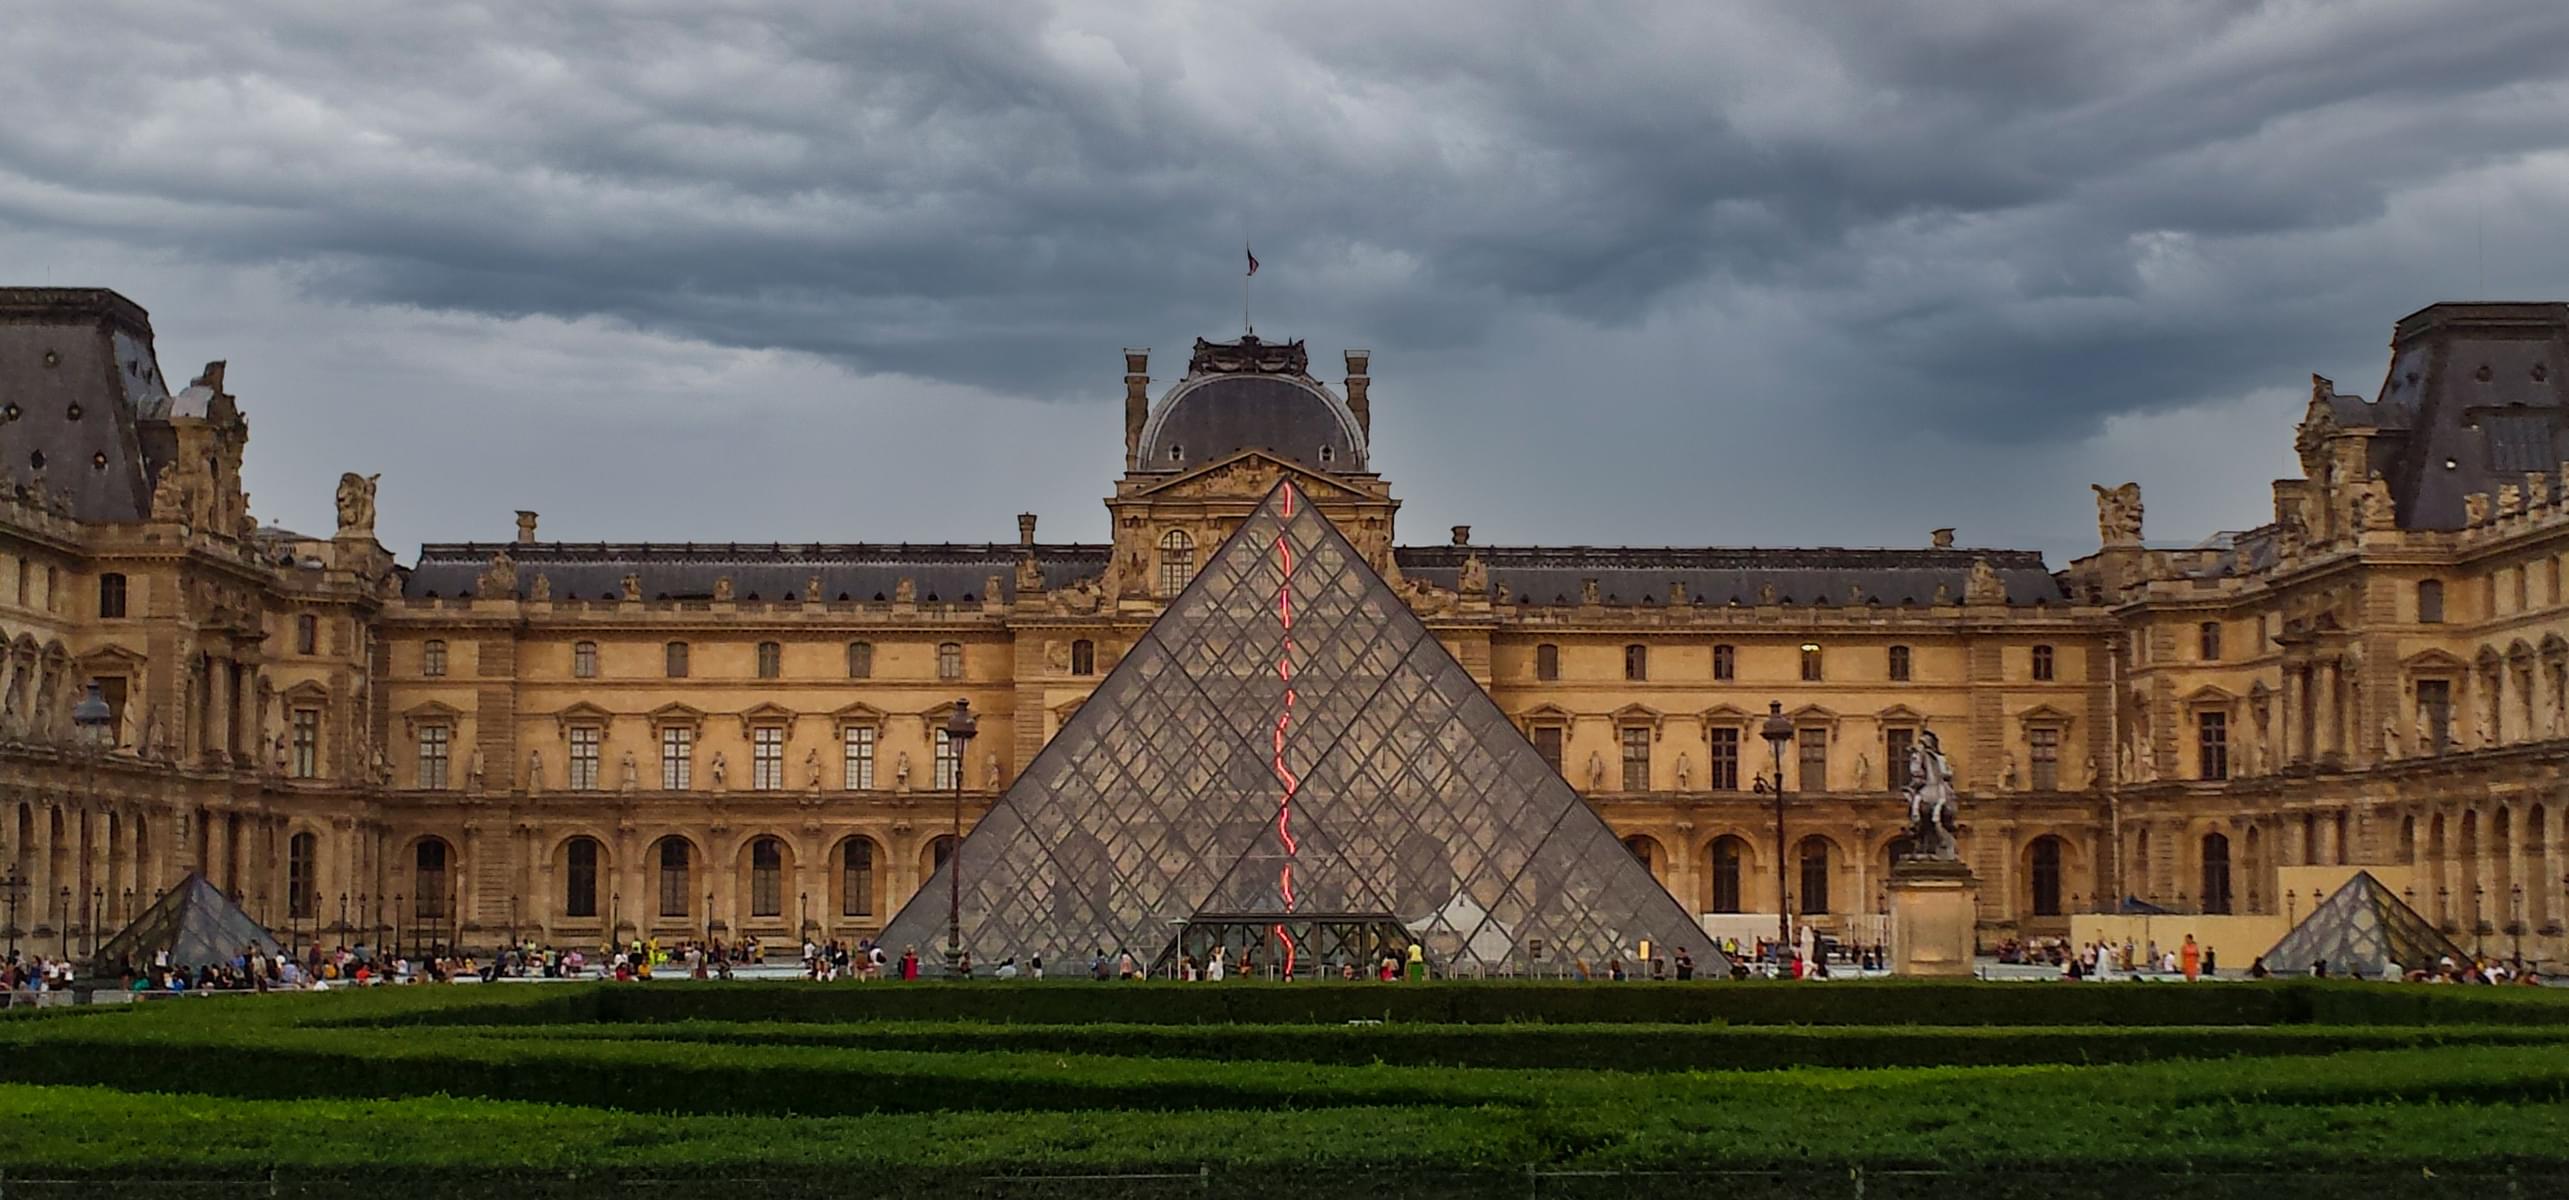 Explore The Louvre Museum